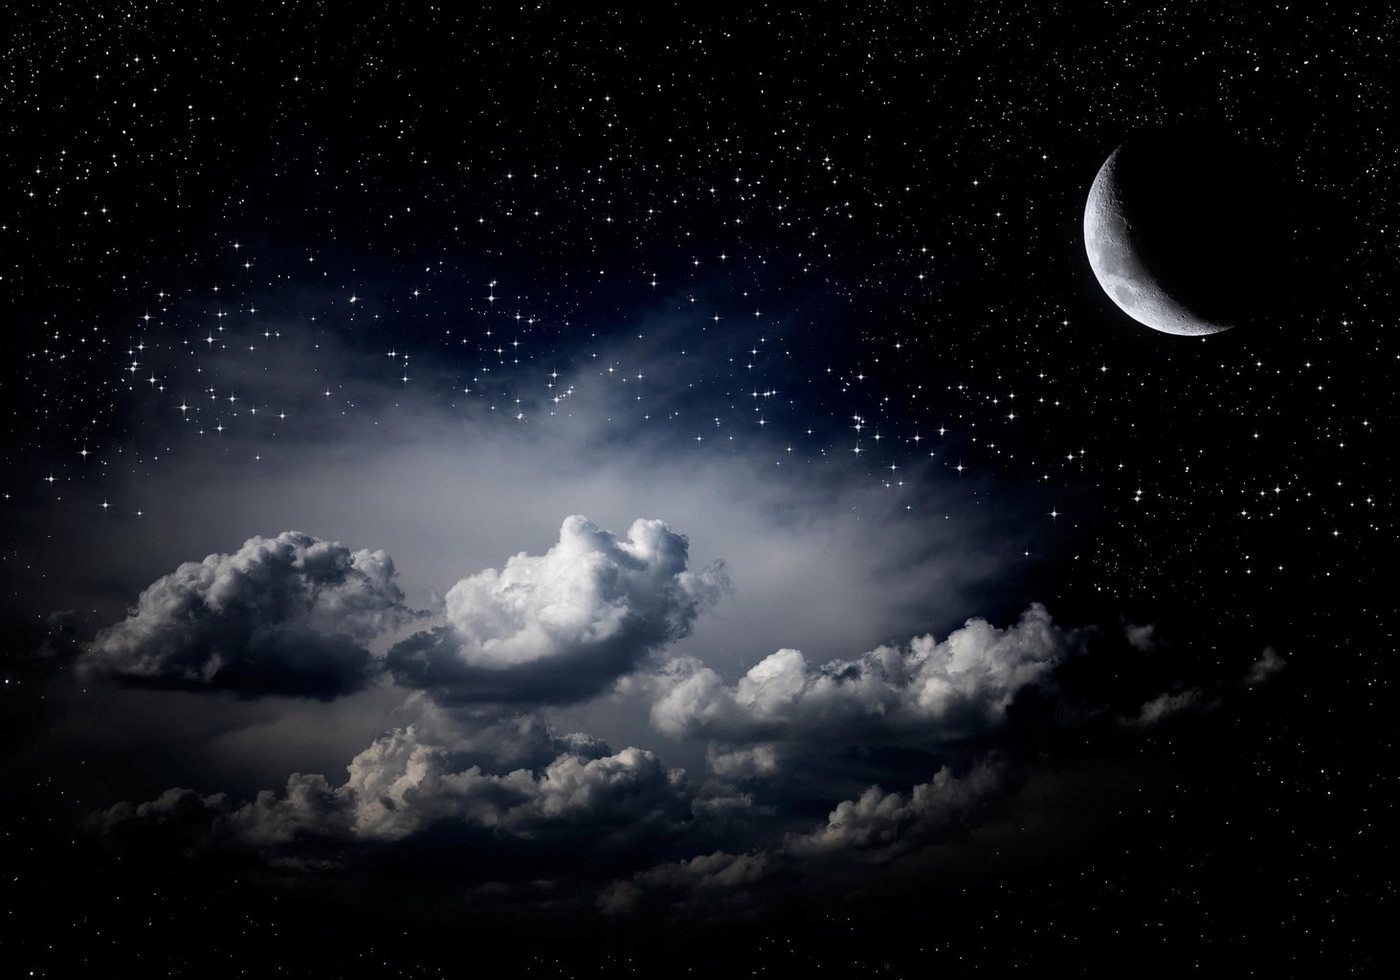 wandmotiv24 Fototapete Himmel Nacht Mond Sternen Wolken, glatt, Wandtapete, Motivtapete, matt, Vliestapete, selbstklebend von wandmotiv24